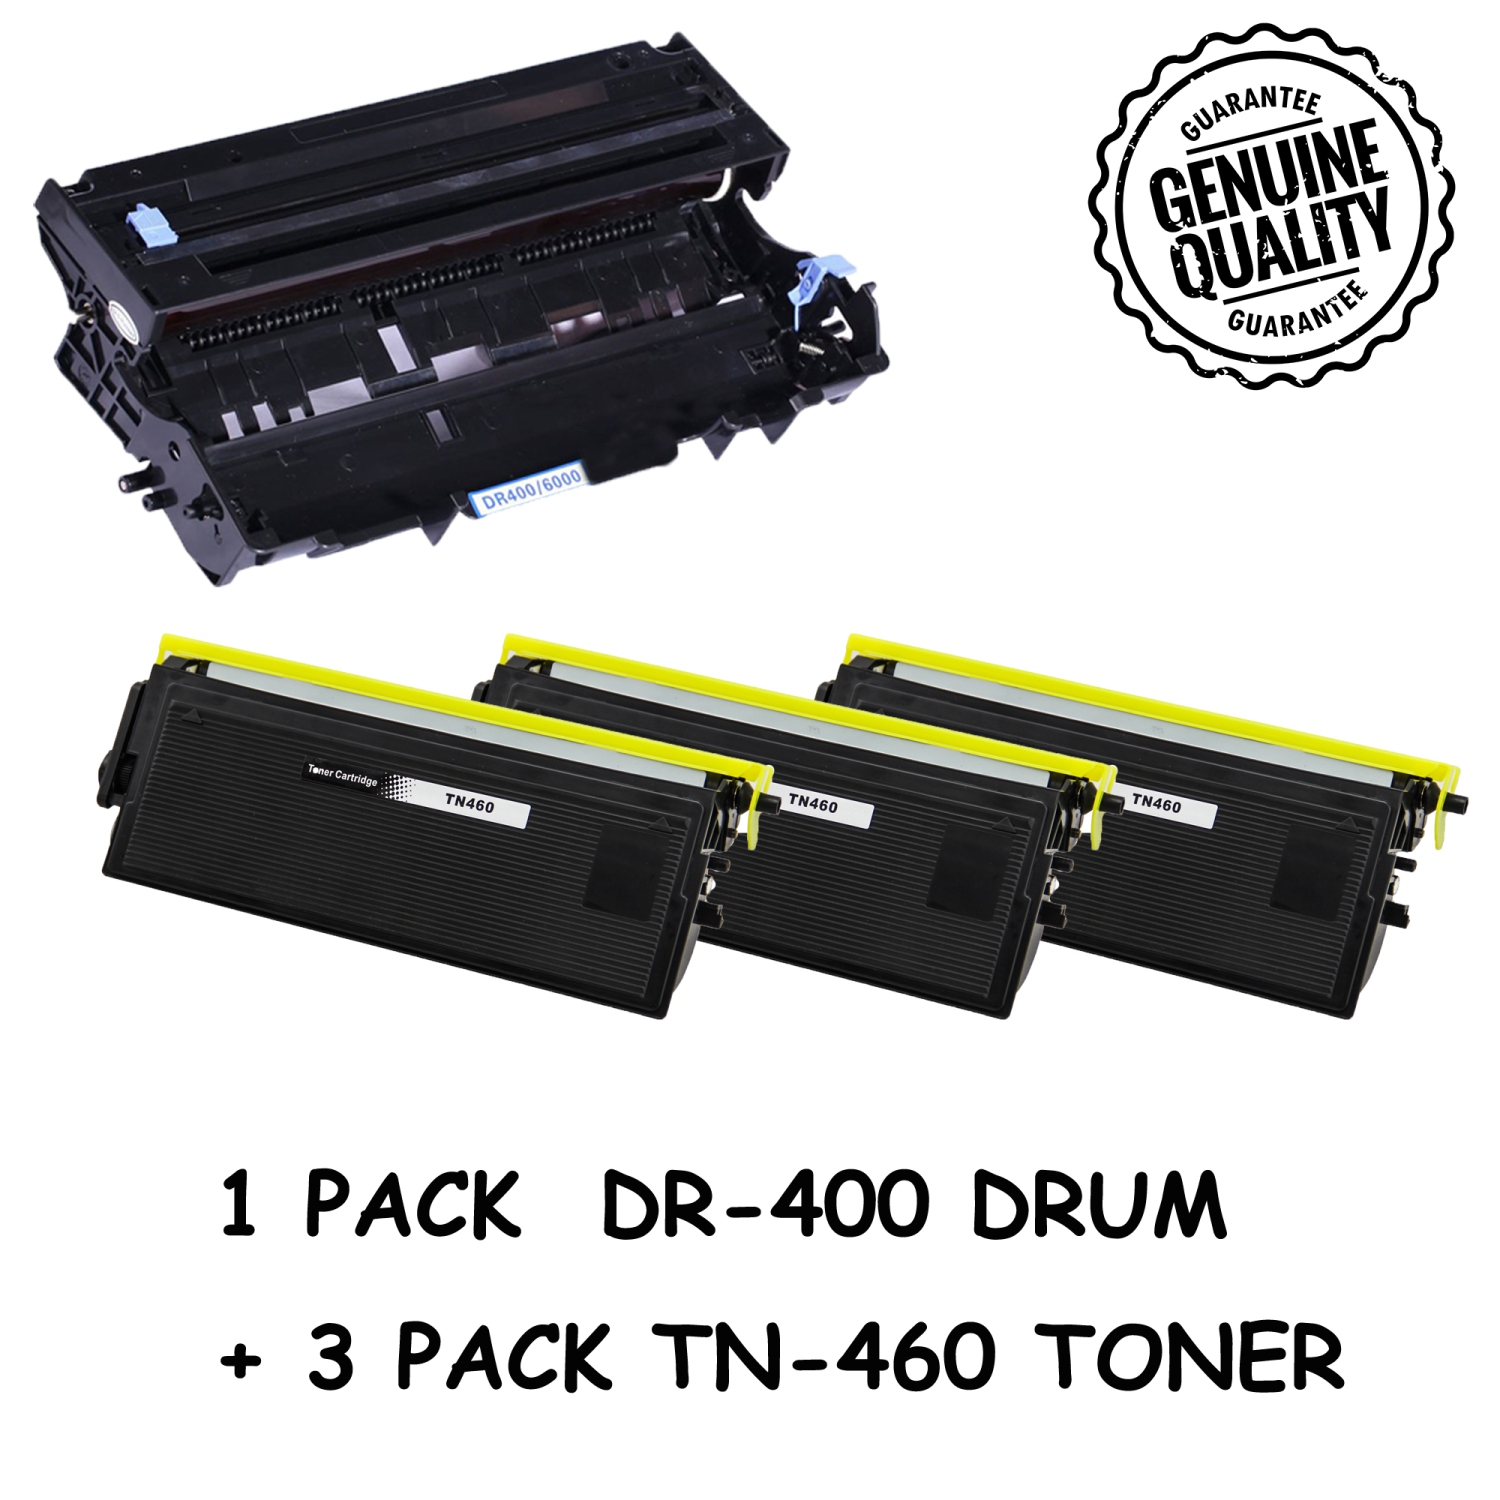 TN460 Toner DR400 Drum For Brother HL-1030 1230 1240 1250 MFC-1260 DCP-1200 